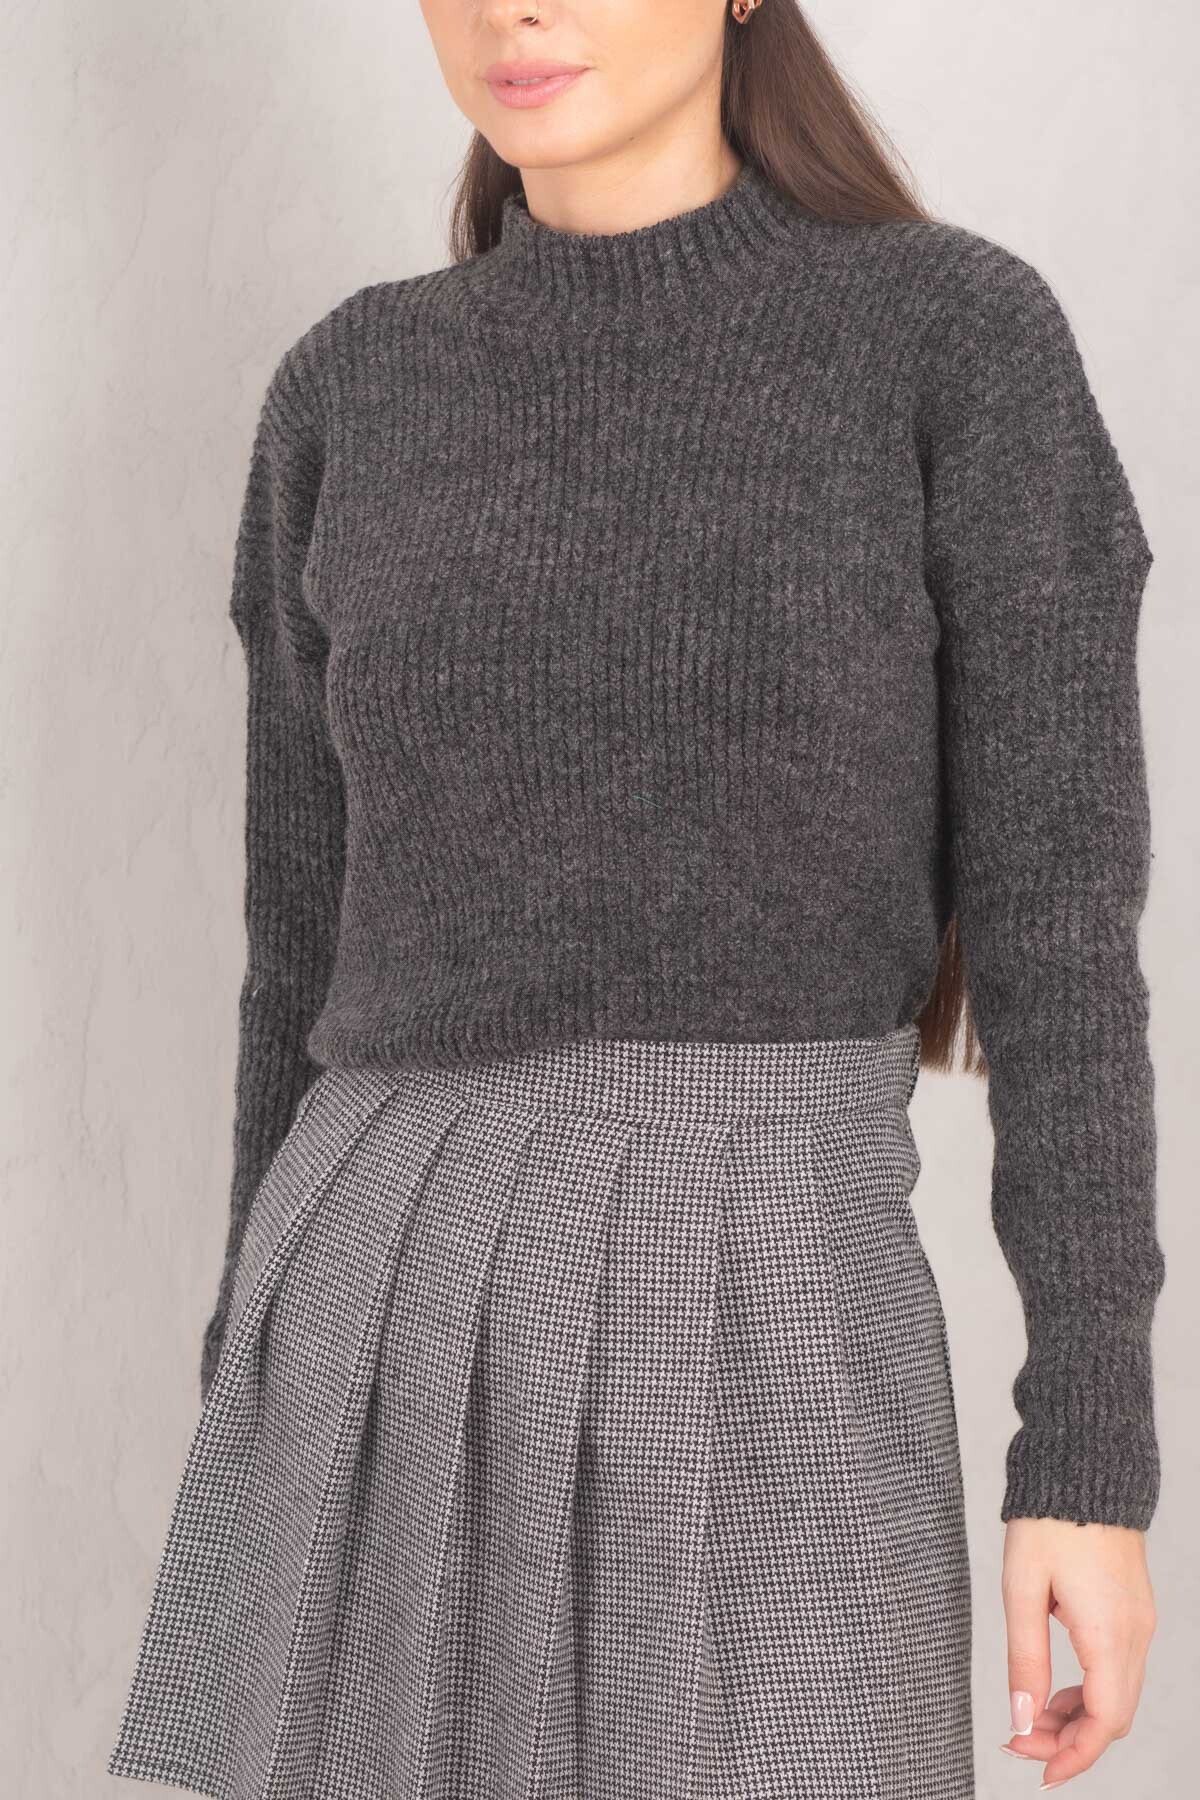 armonika Women's Anthracite High Neck Knitwear Knit Sweater